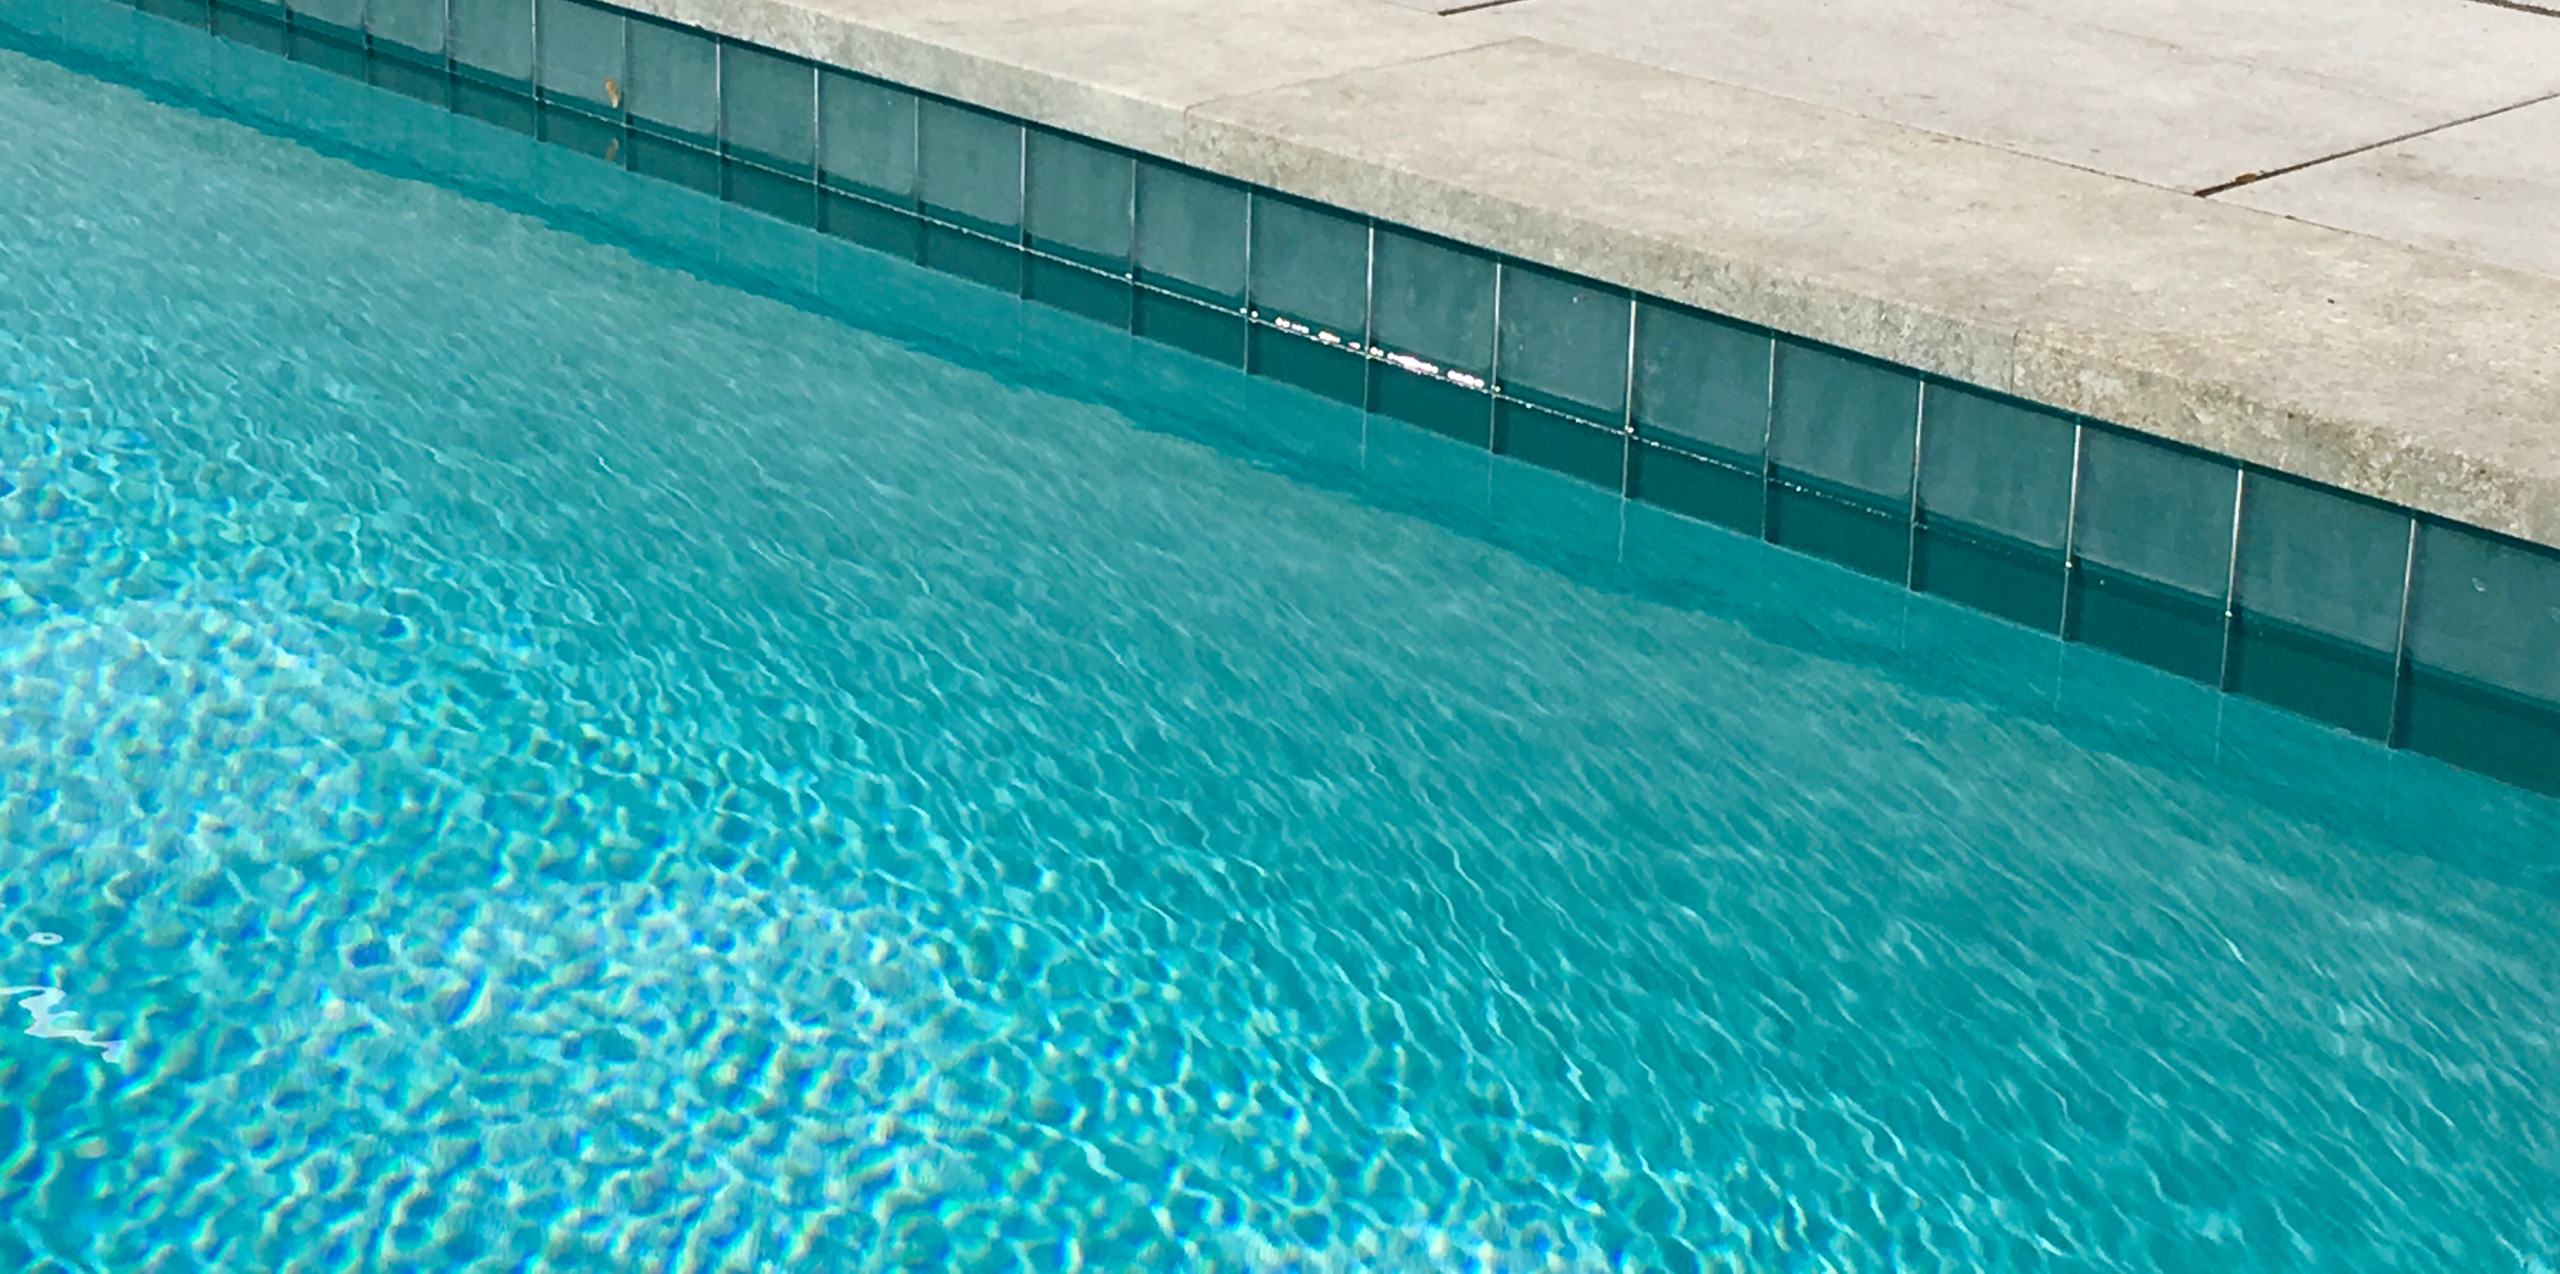 Pool Waterline Tile - Photos & Ideas | Houzz